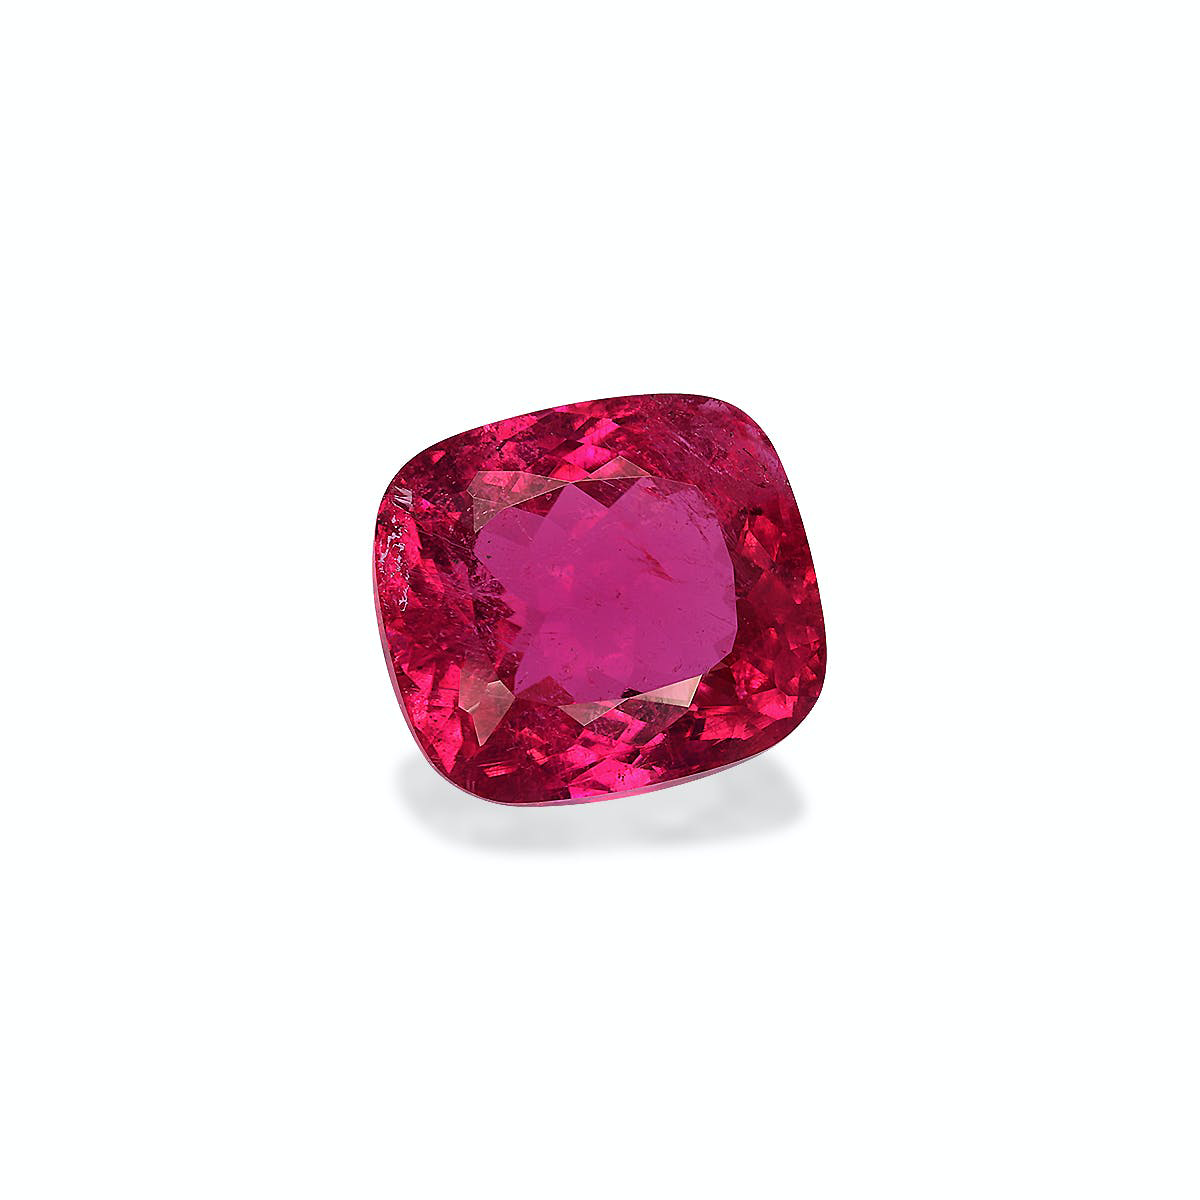 Picture of Vivid Pink Rubellite Tourmaline 6.74ct - 12x10mm (RL1220)